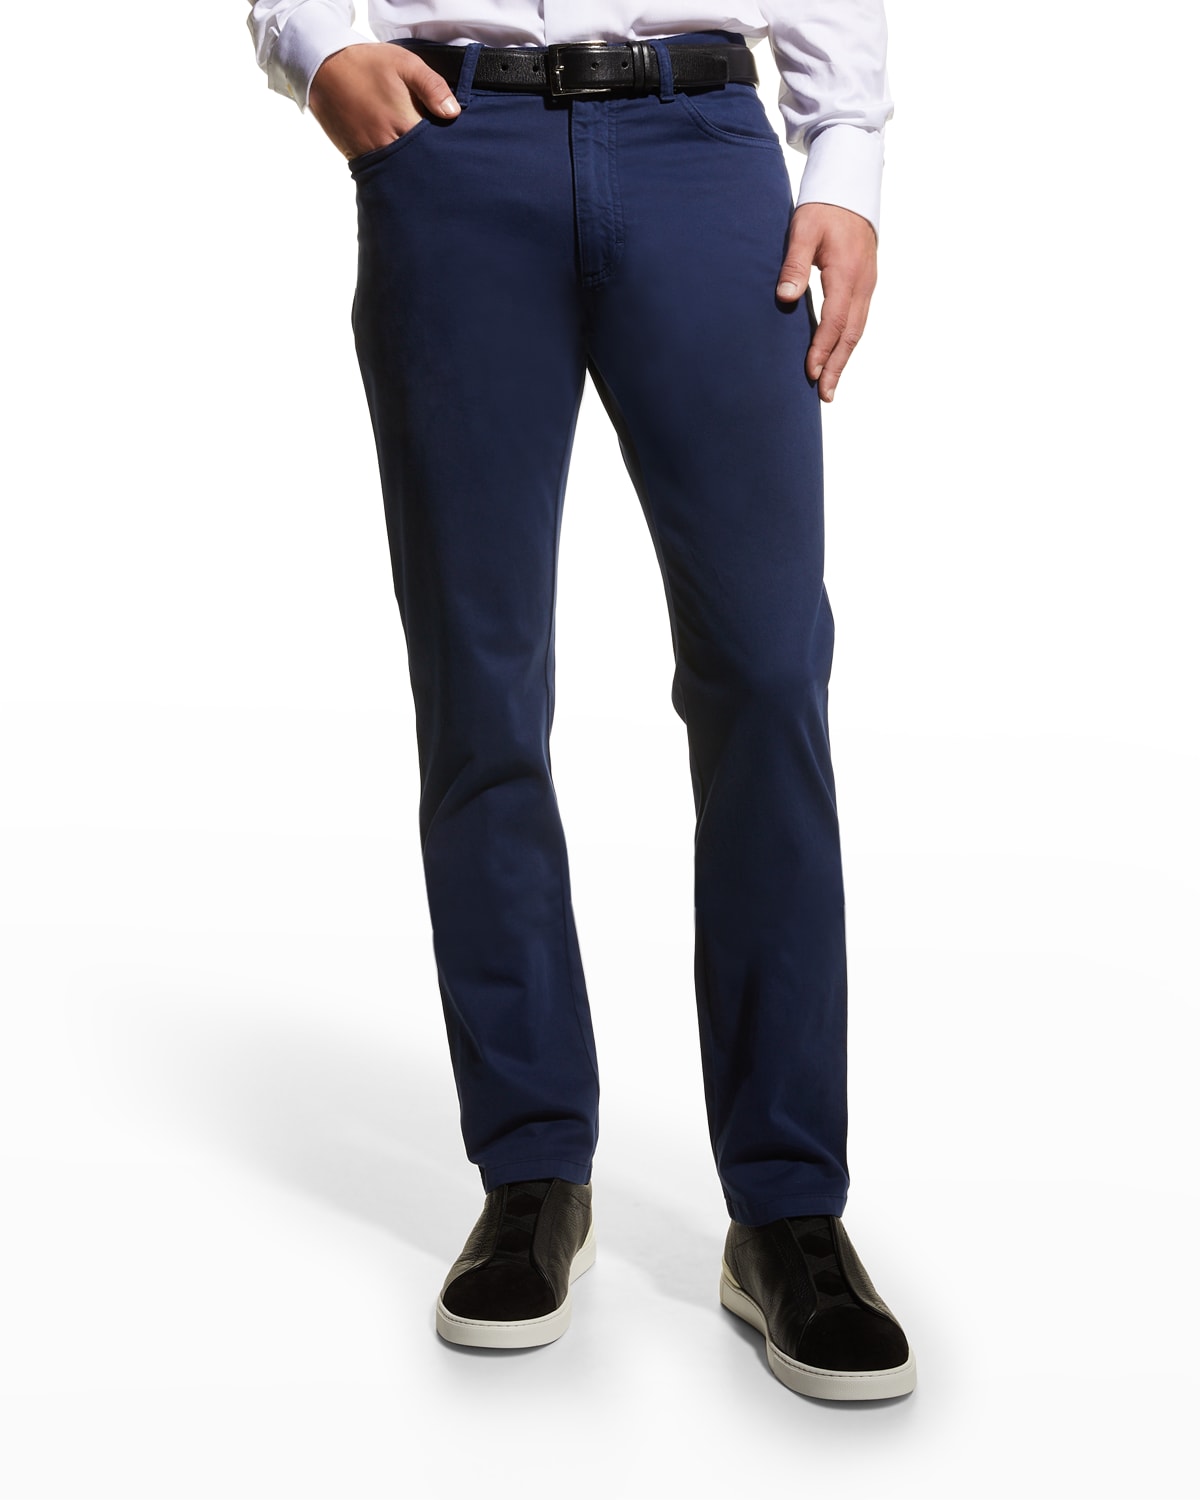 Five Sp 45 Sp Pocket Mens Pants | Neiman Marcus